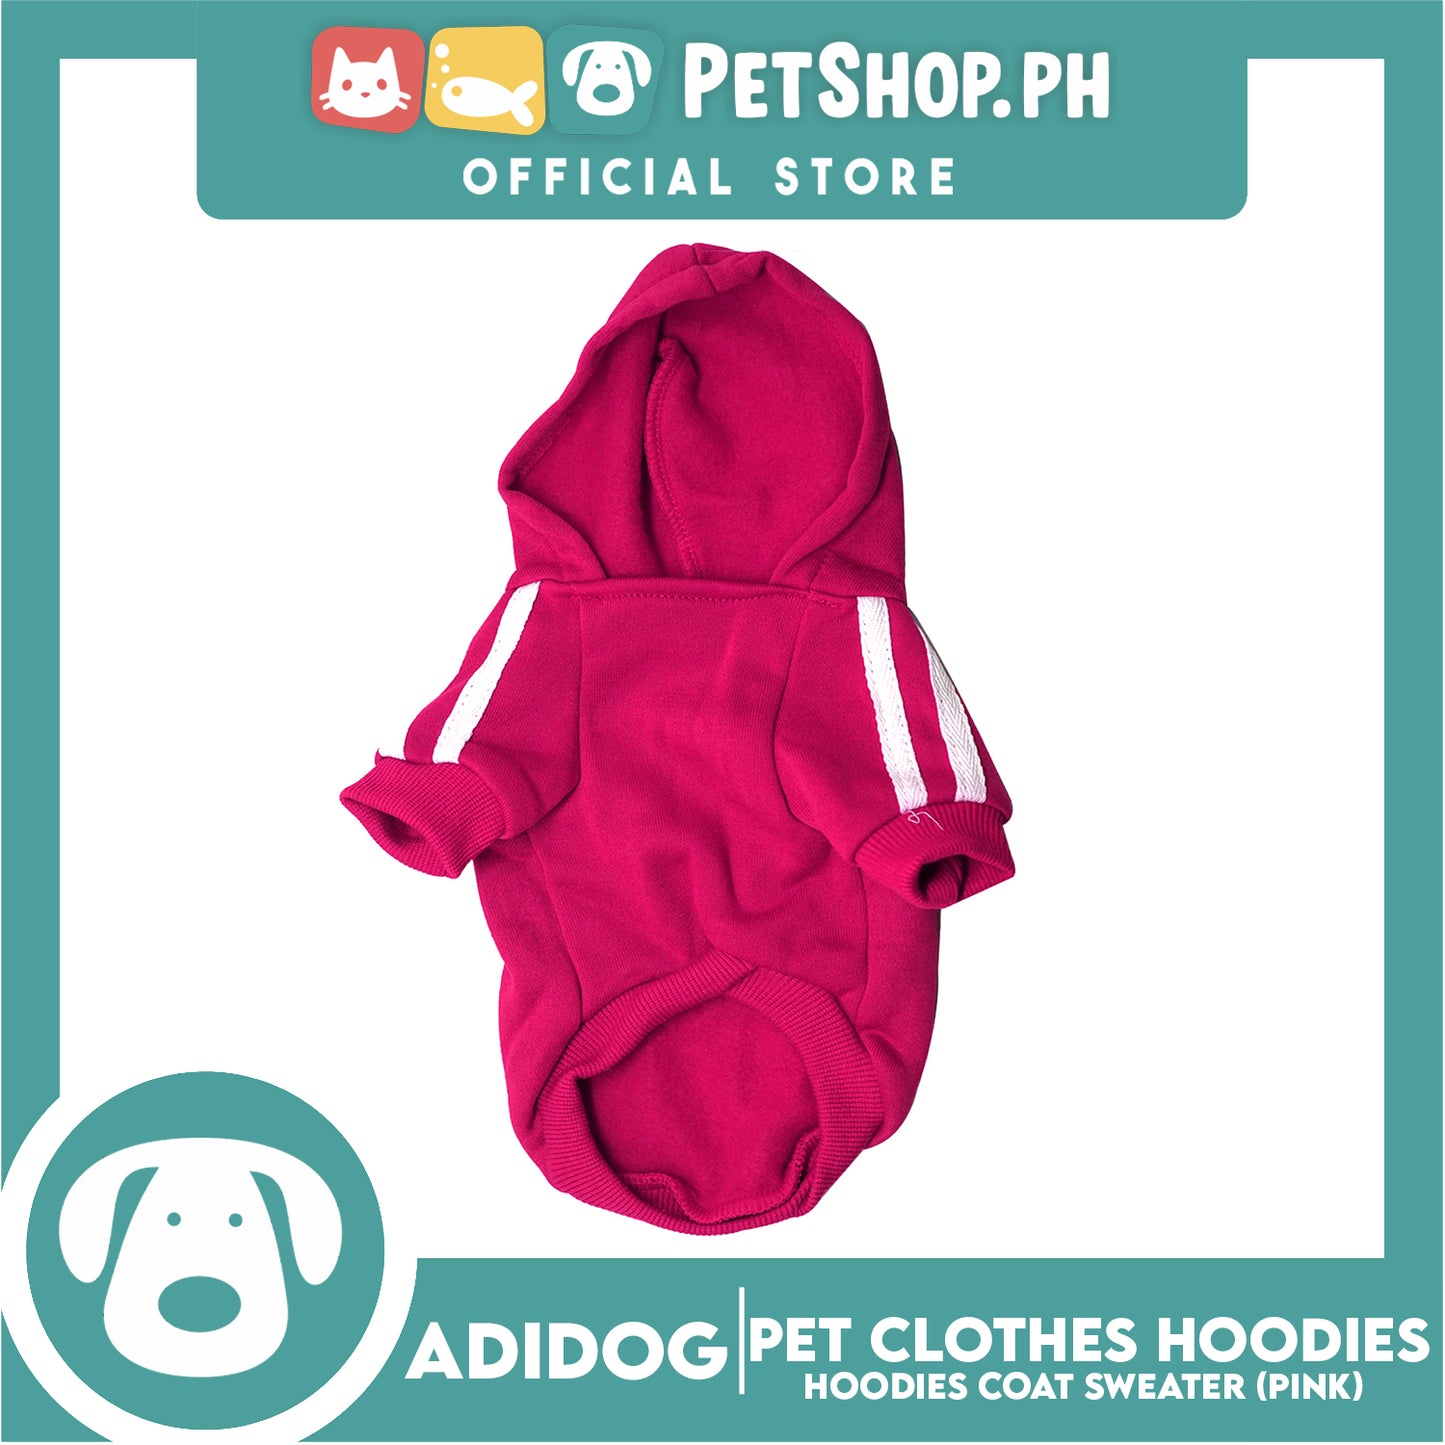 Adidog Pet Clothes Hoodies, Cute Warm Winter Hoodies Coat Sweater (Pink) Small